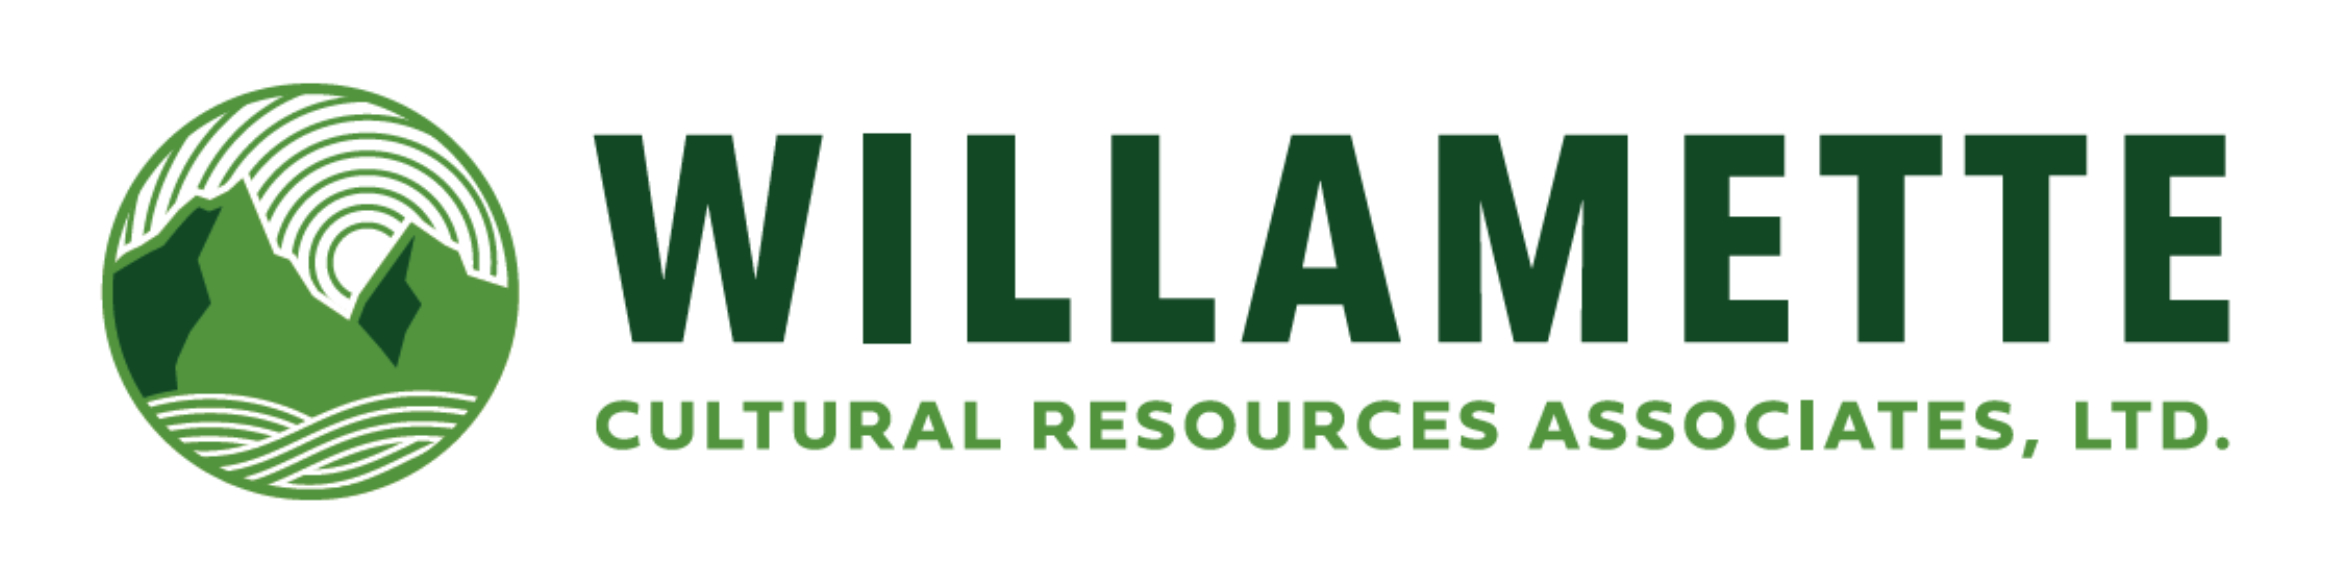 Willamette Cultural Resources Associates, Ltd. (WillametteCRA)